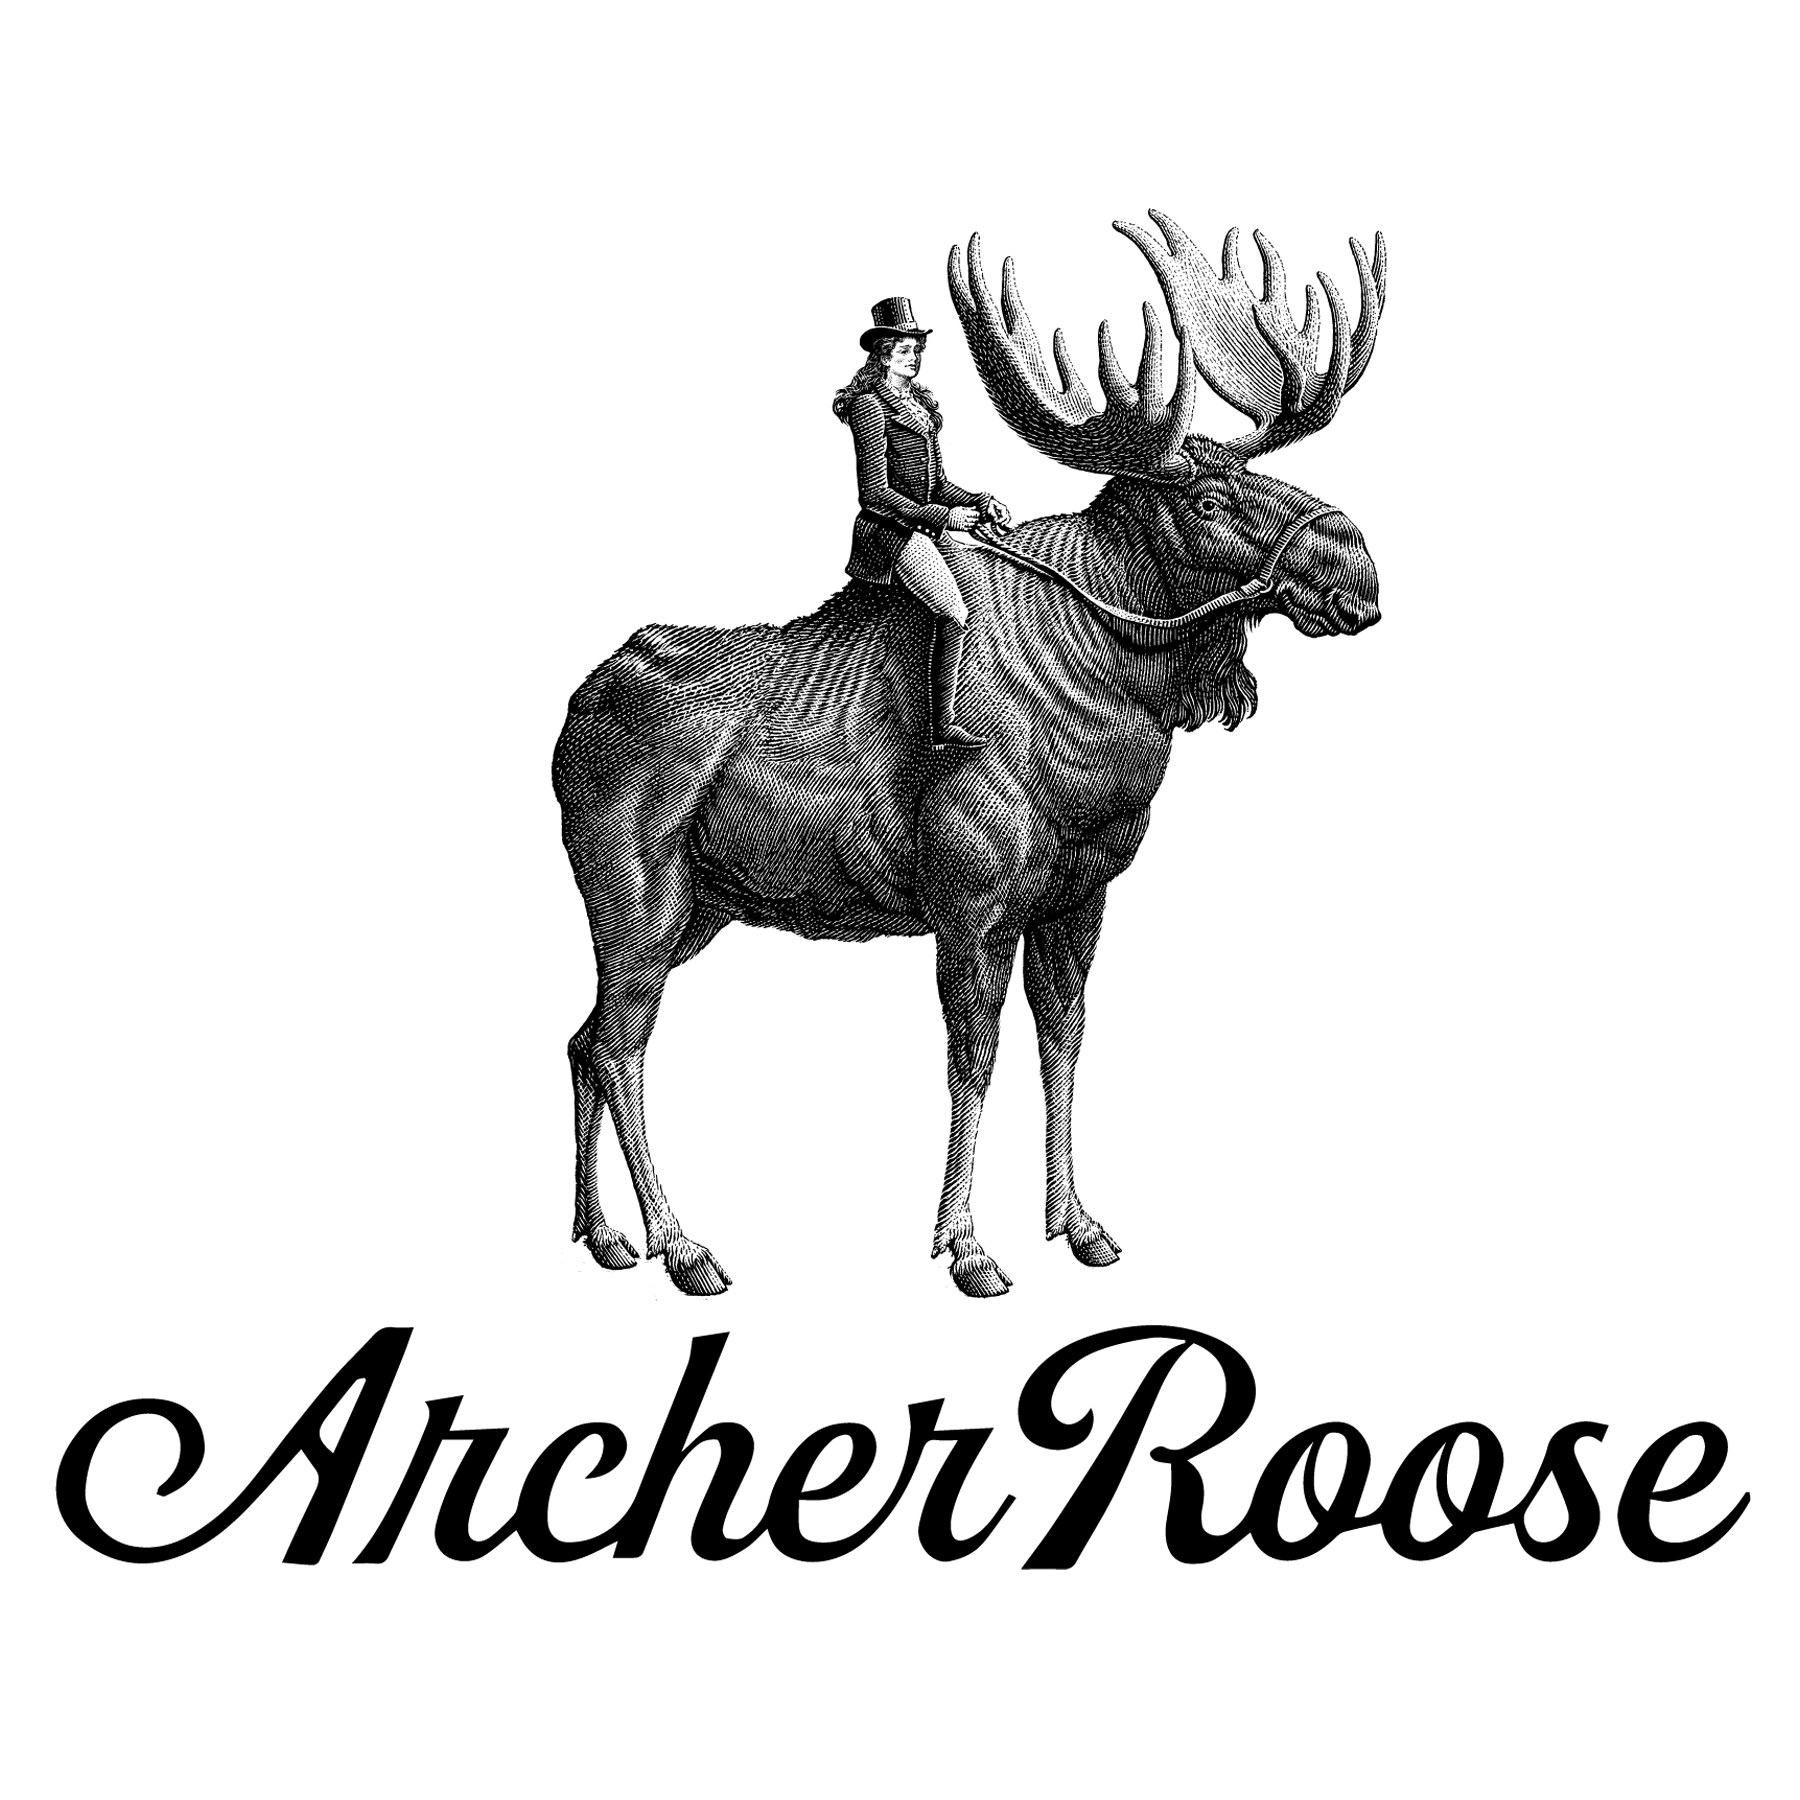 Archer Roose